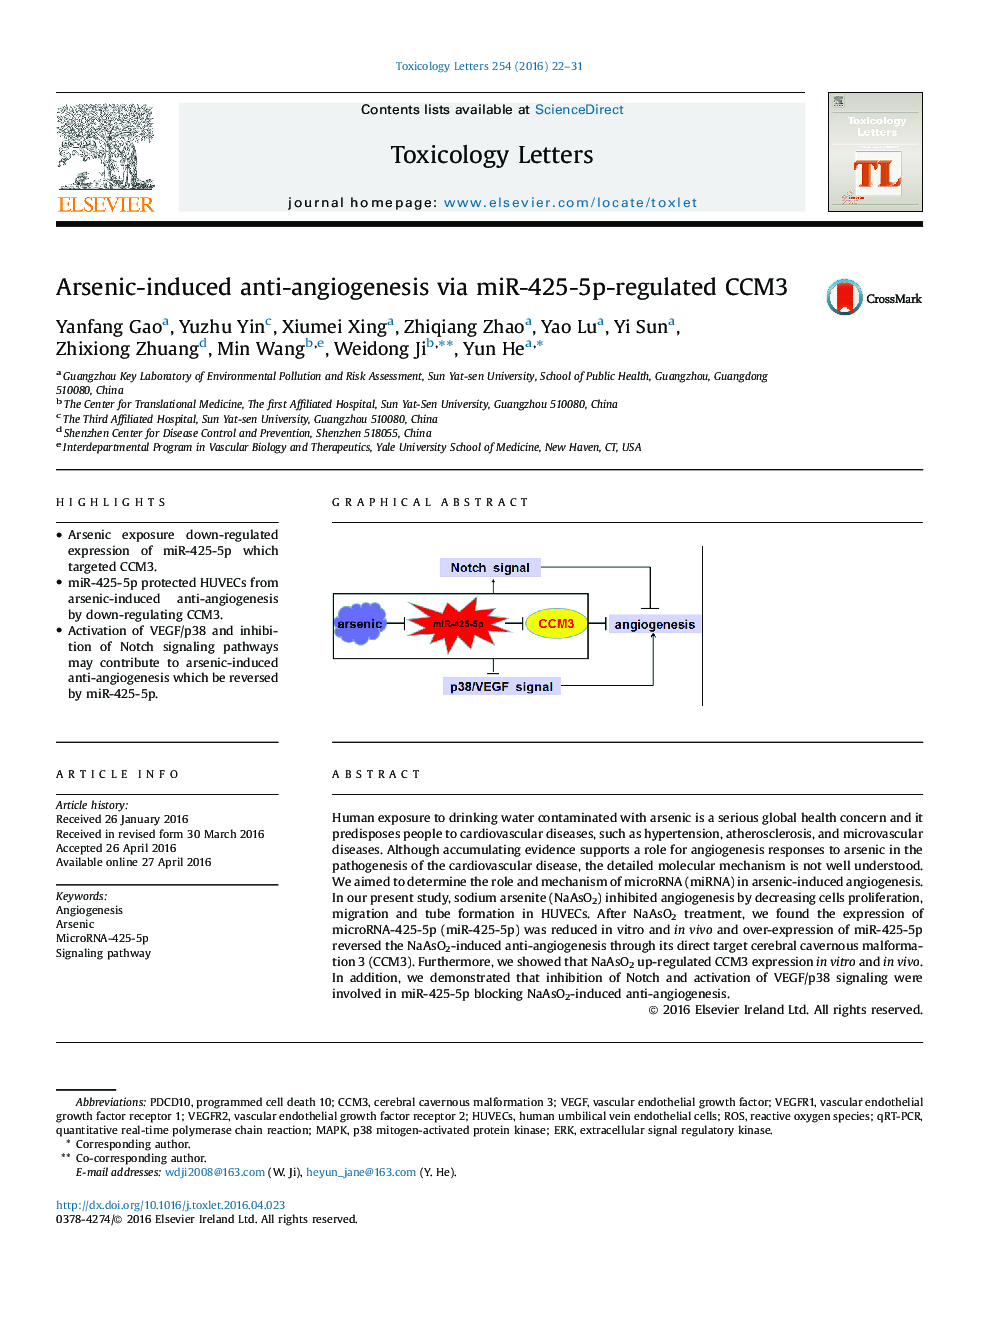 Arsenic-induced anti-angiogenesis via miR-425-5p-regulated CCM3